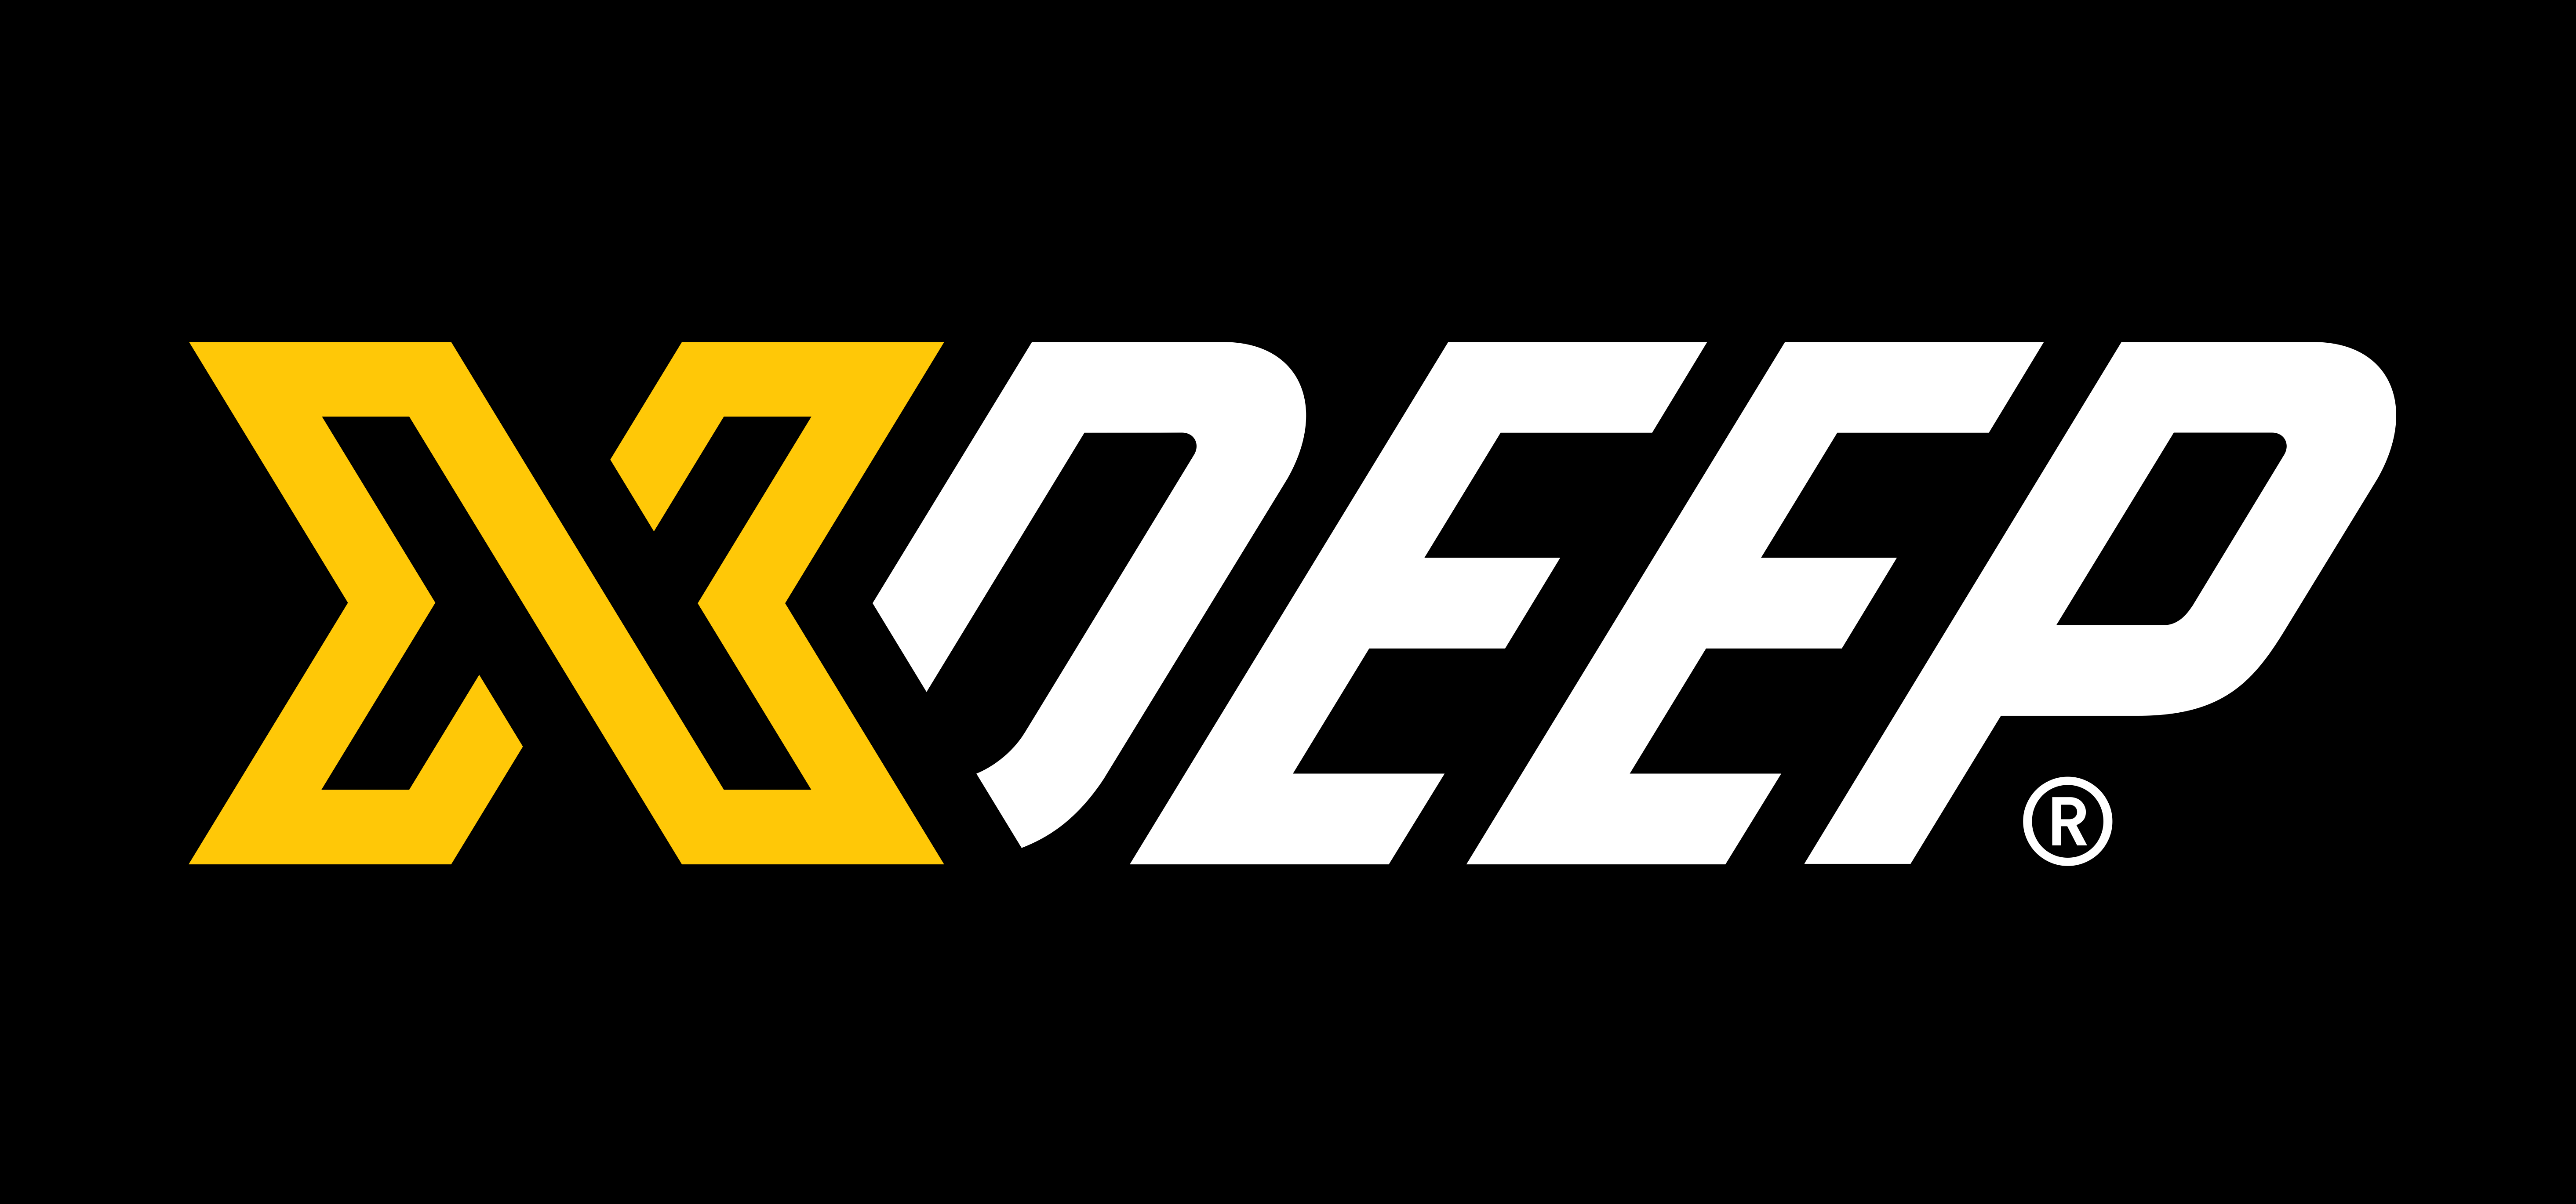 Xdeep - Dive SideMount Explorers